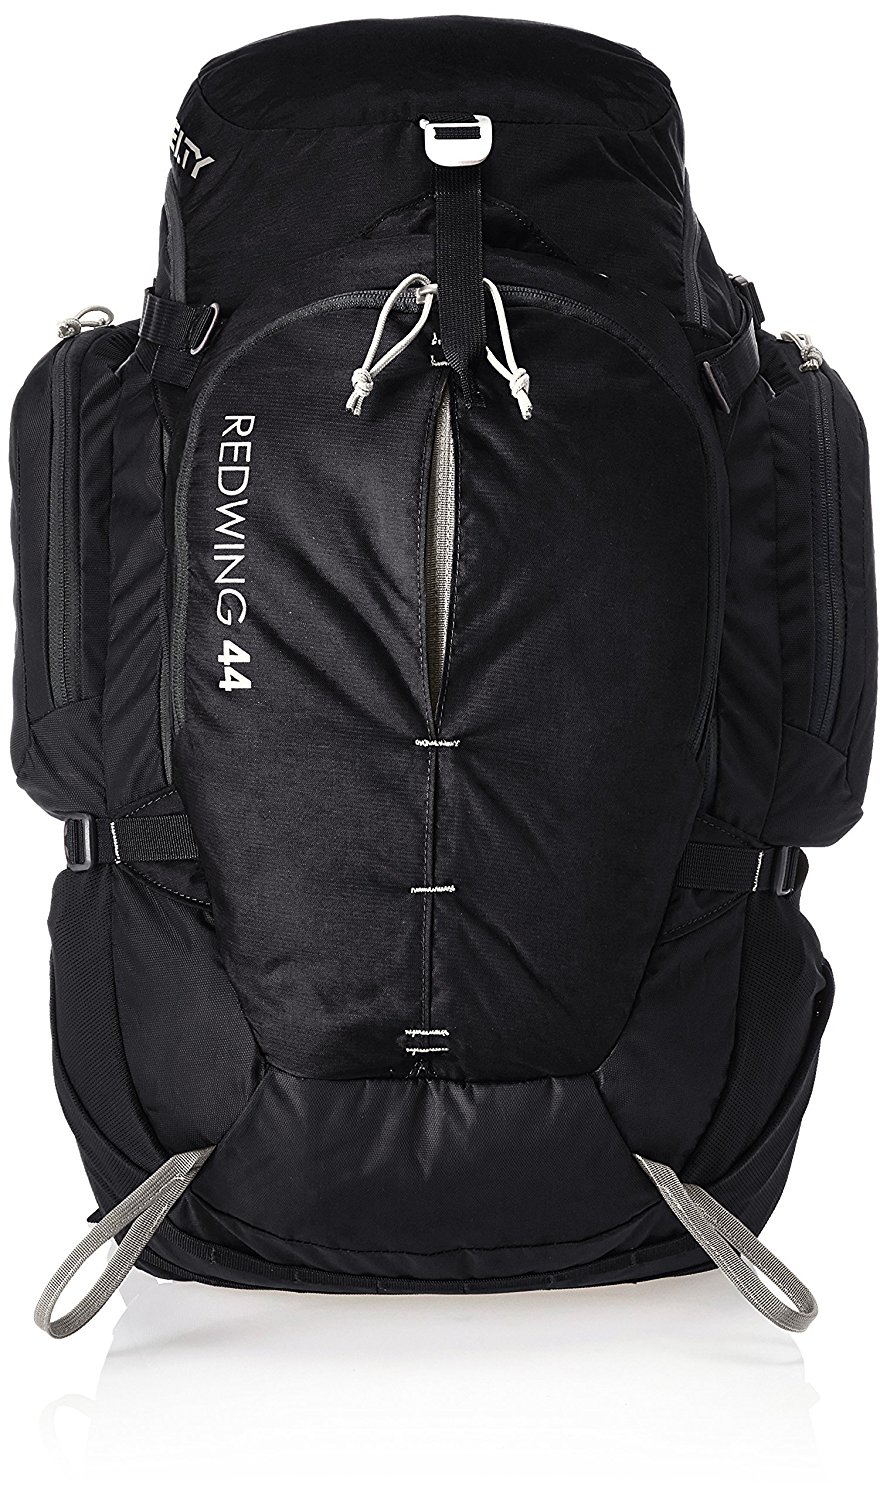 Hiking Backpack Brands Online, 56% OFF | www.ingeniovirtual.com